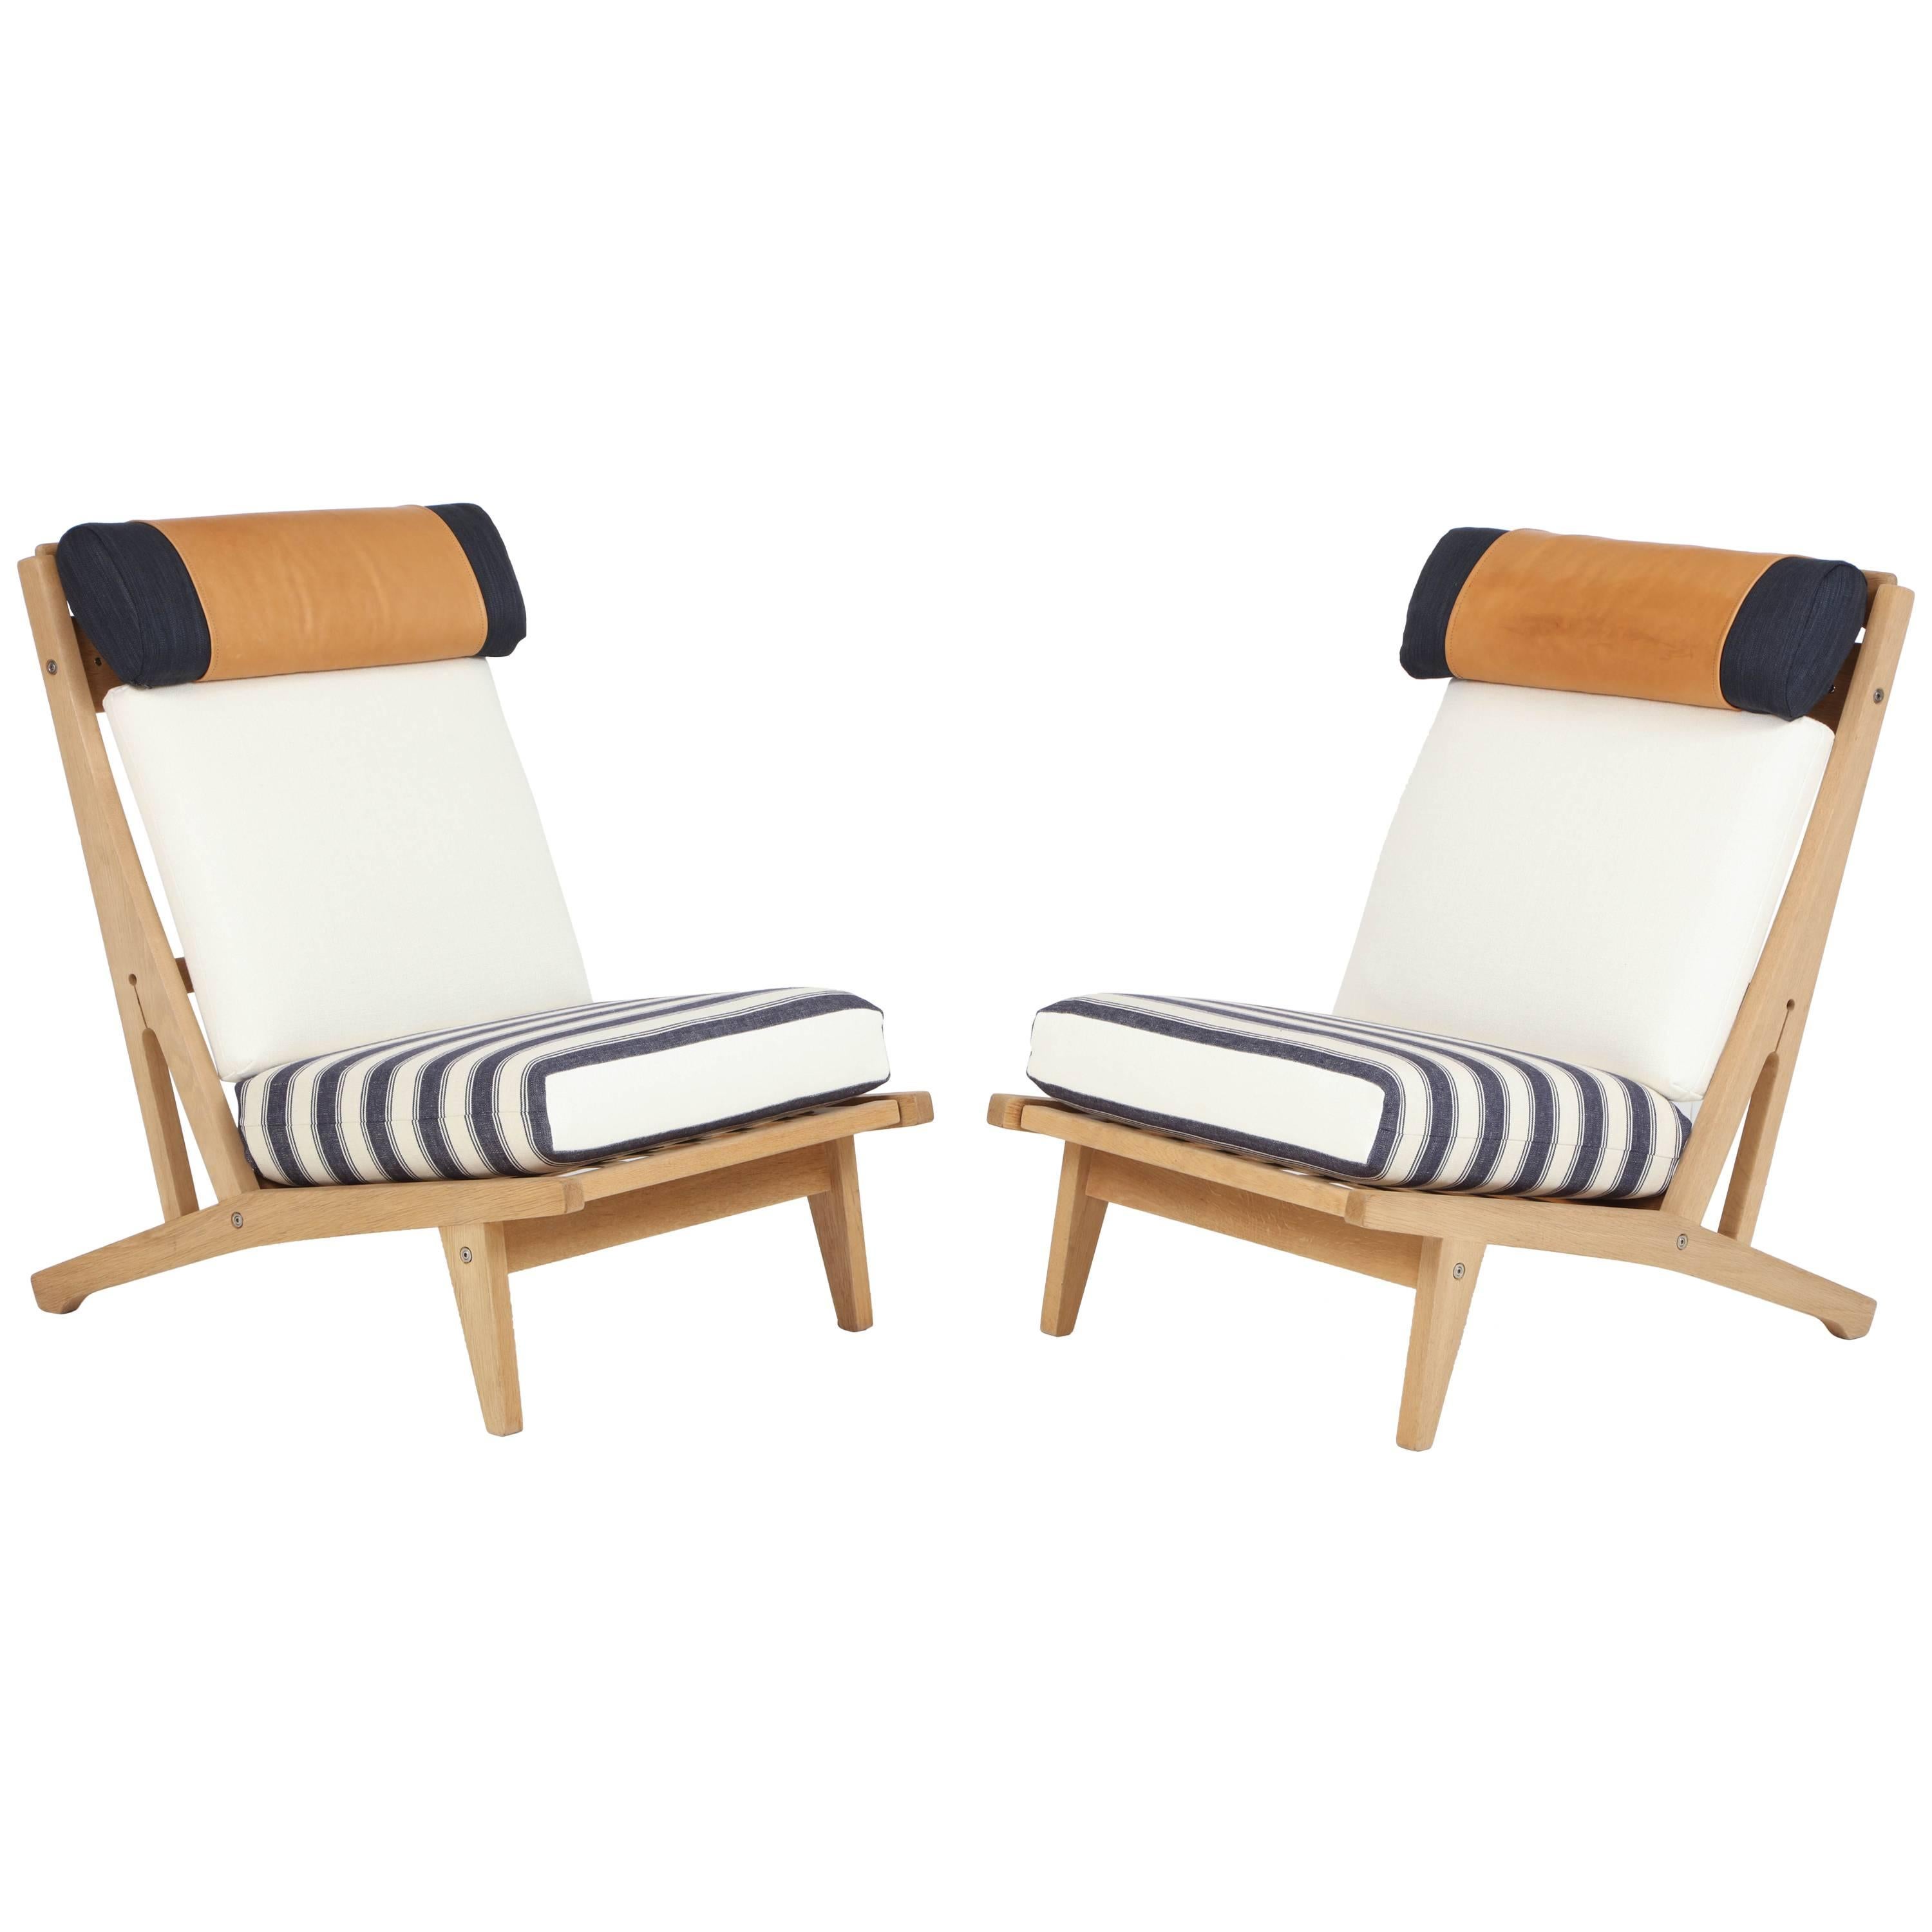 Pair of Hans J Wegner GETAMA Lounge Chairs, circa 1960s